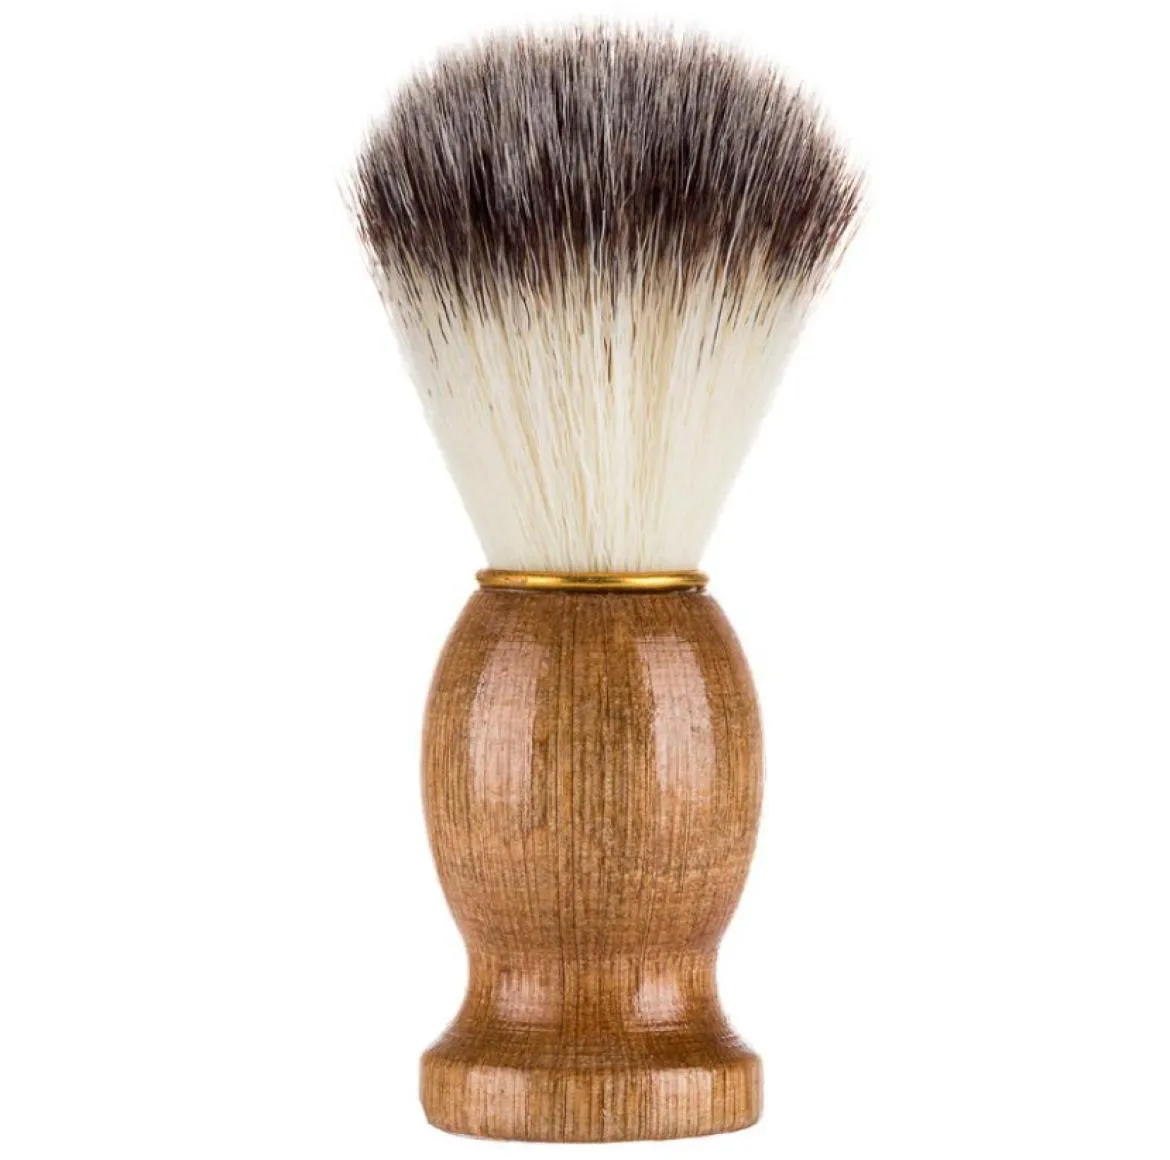 50pcs Men039s Shaving Brush Barber Salon Men Facial Beard Cleaning Appliance Shave Tool Razor Brush with Wood Handle for men3731708